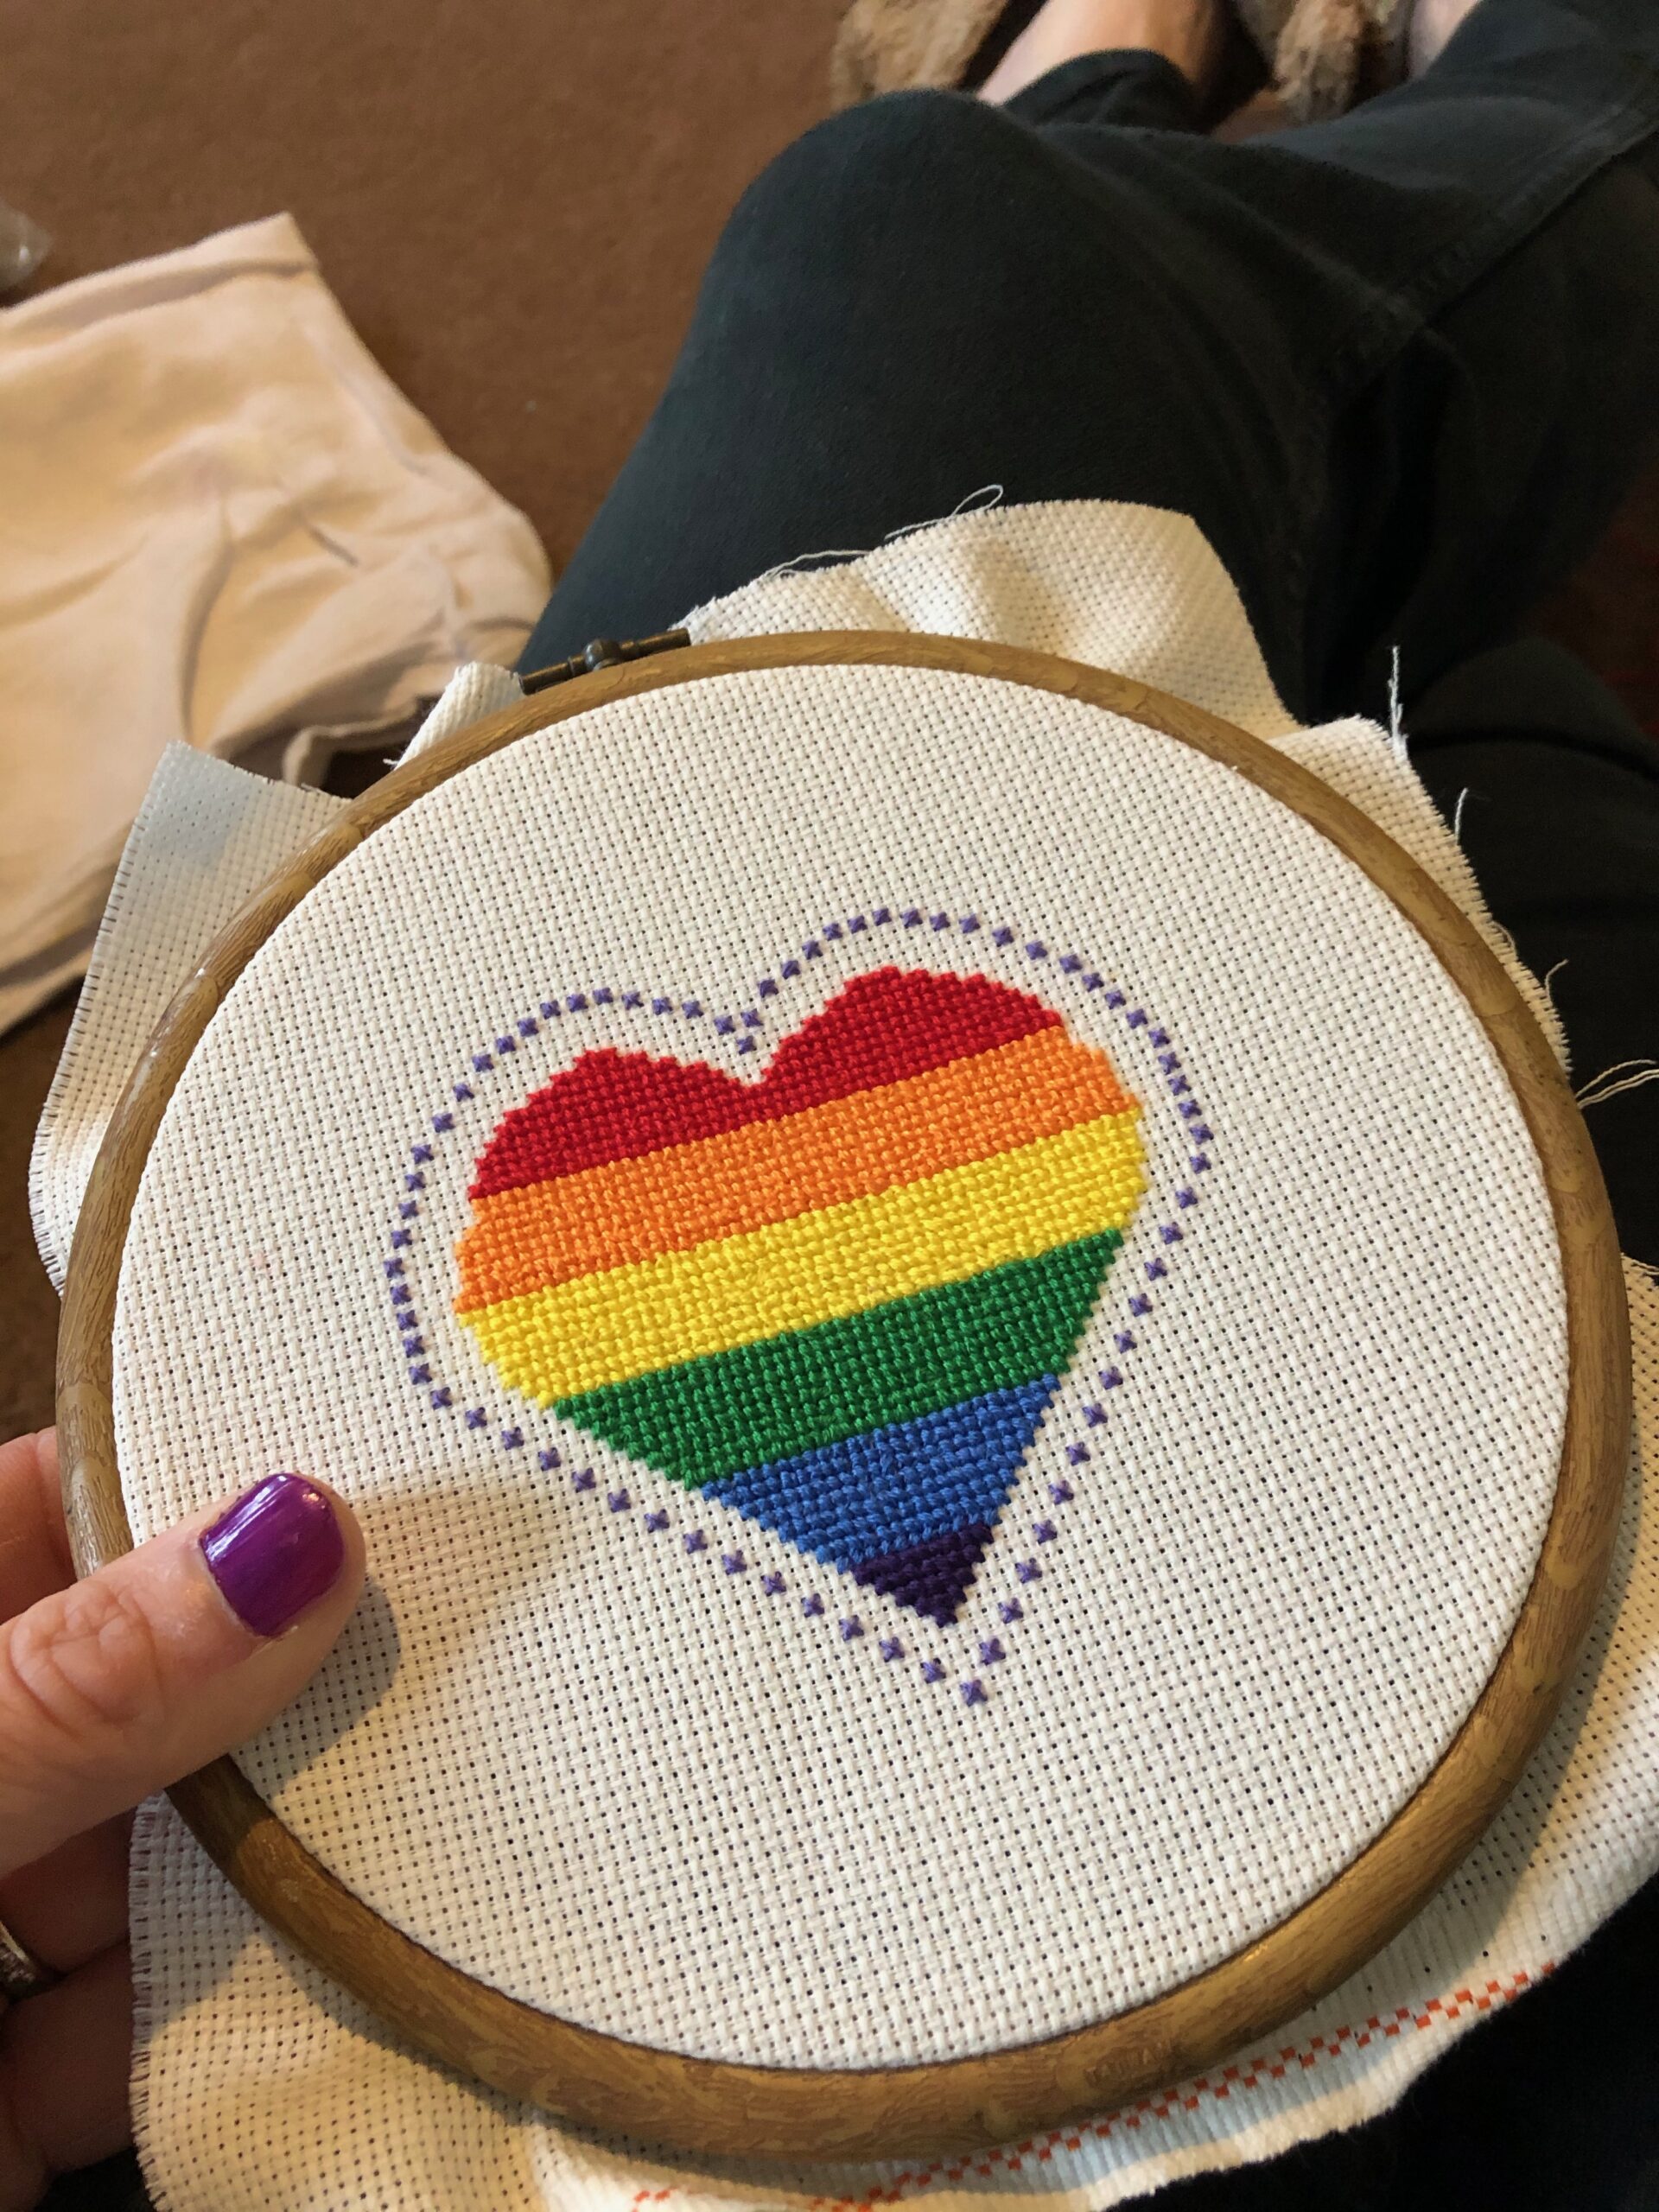 Cross stitched rainbow love.